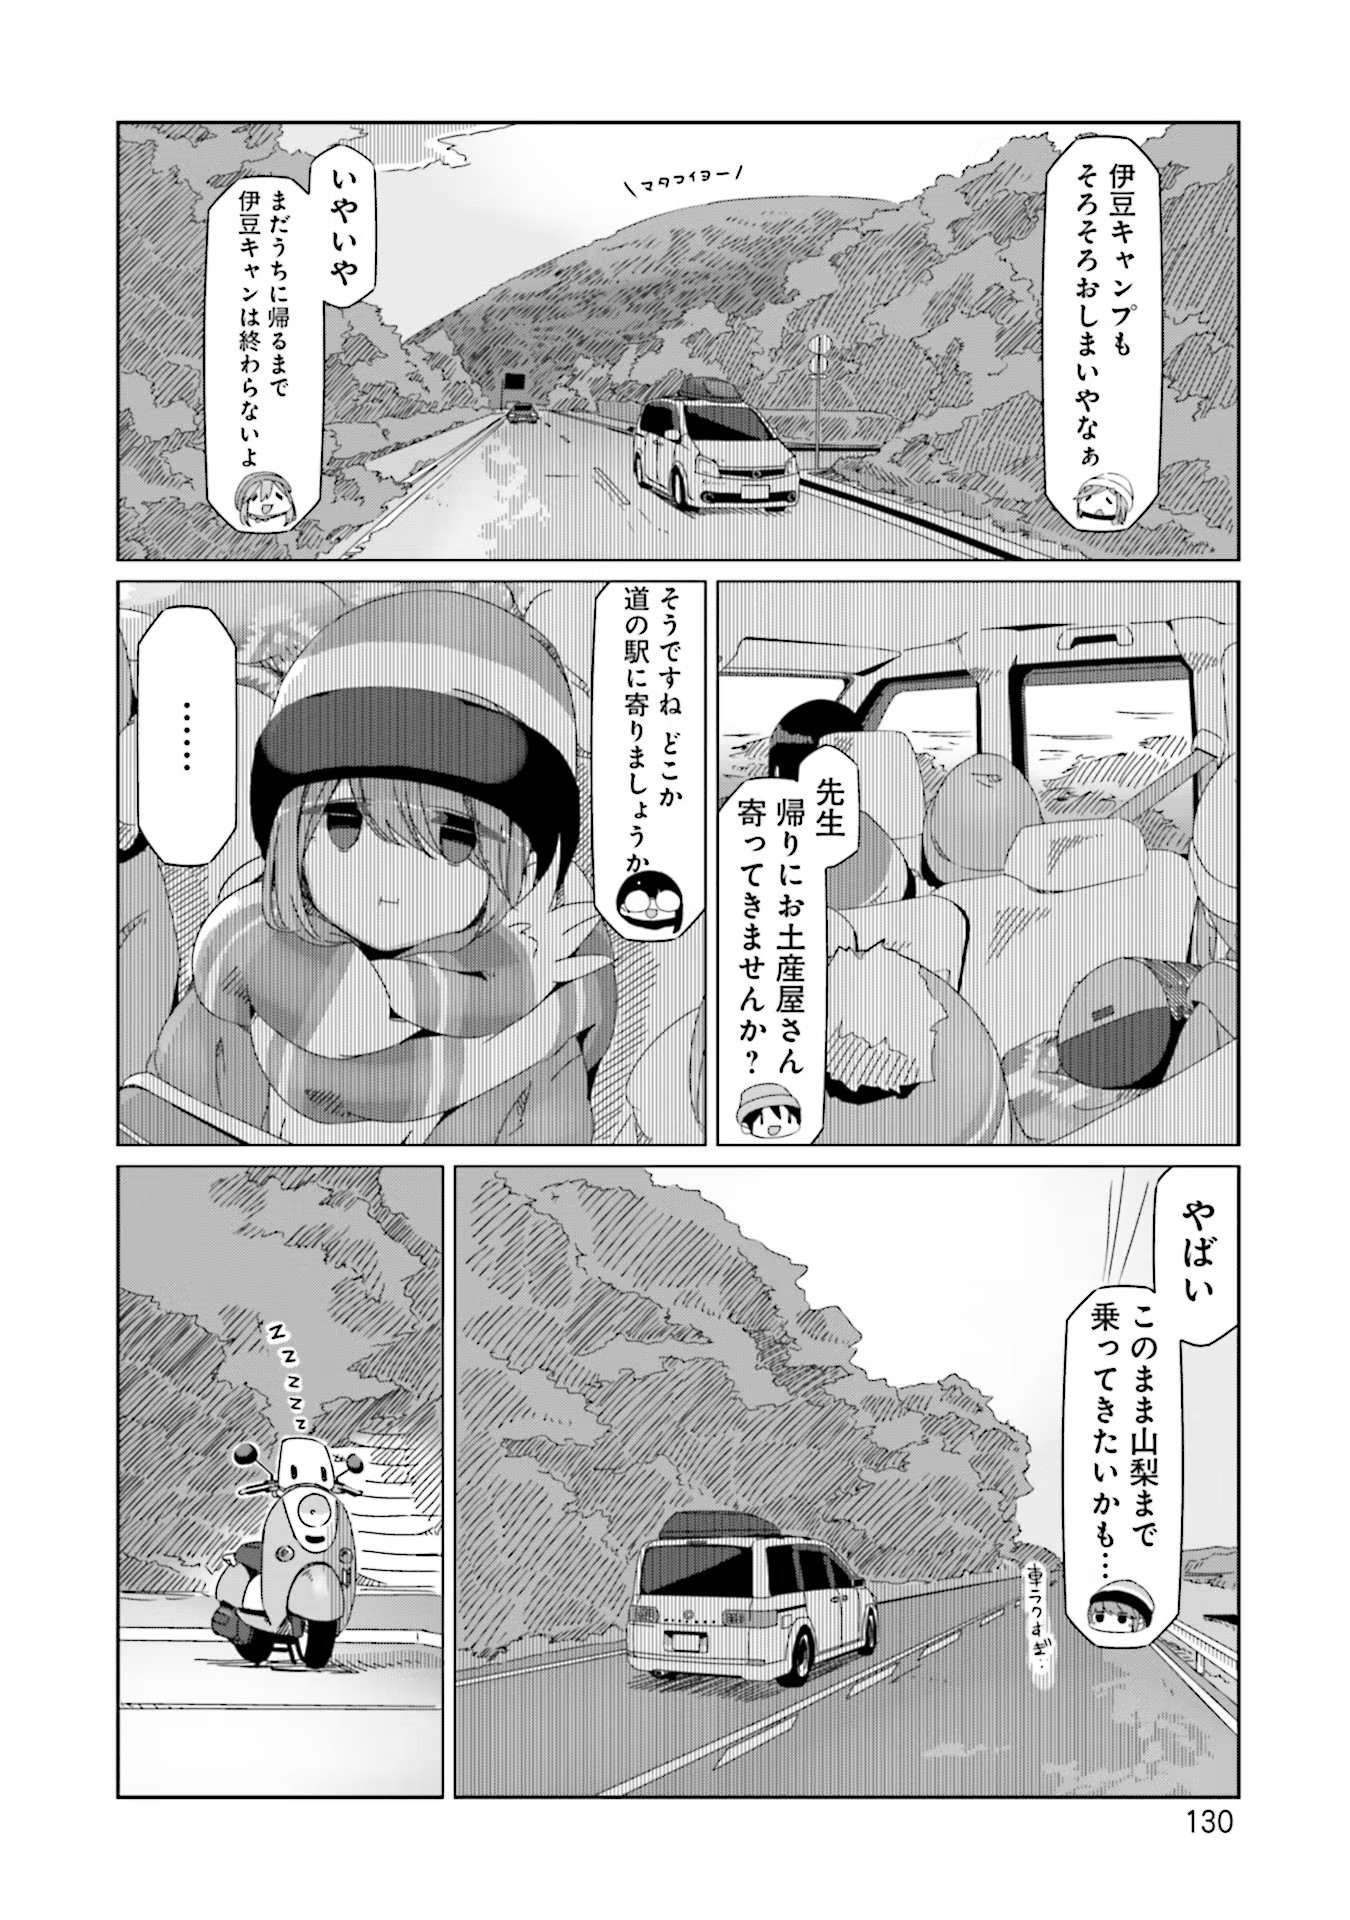 Yuru Camp - Chapter 51 - Page 24